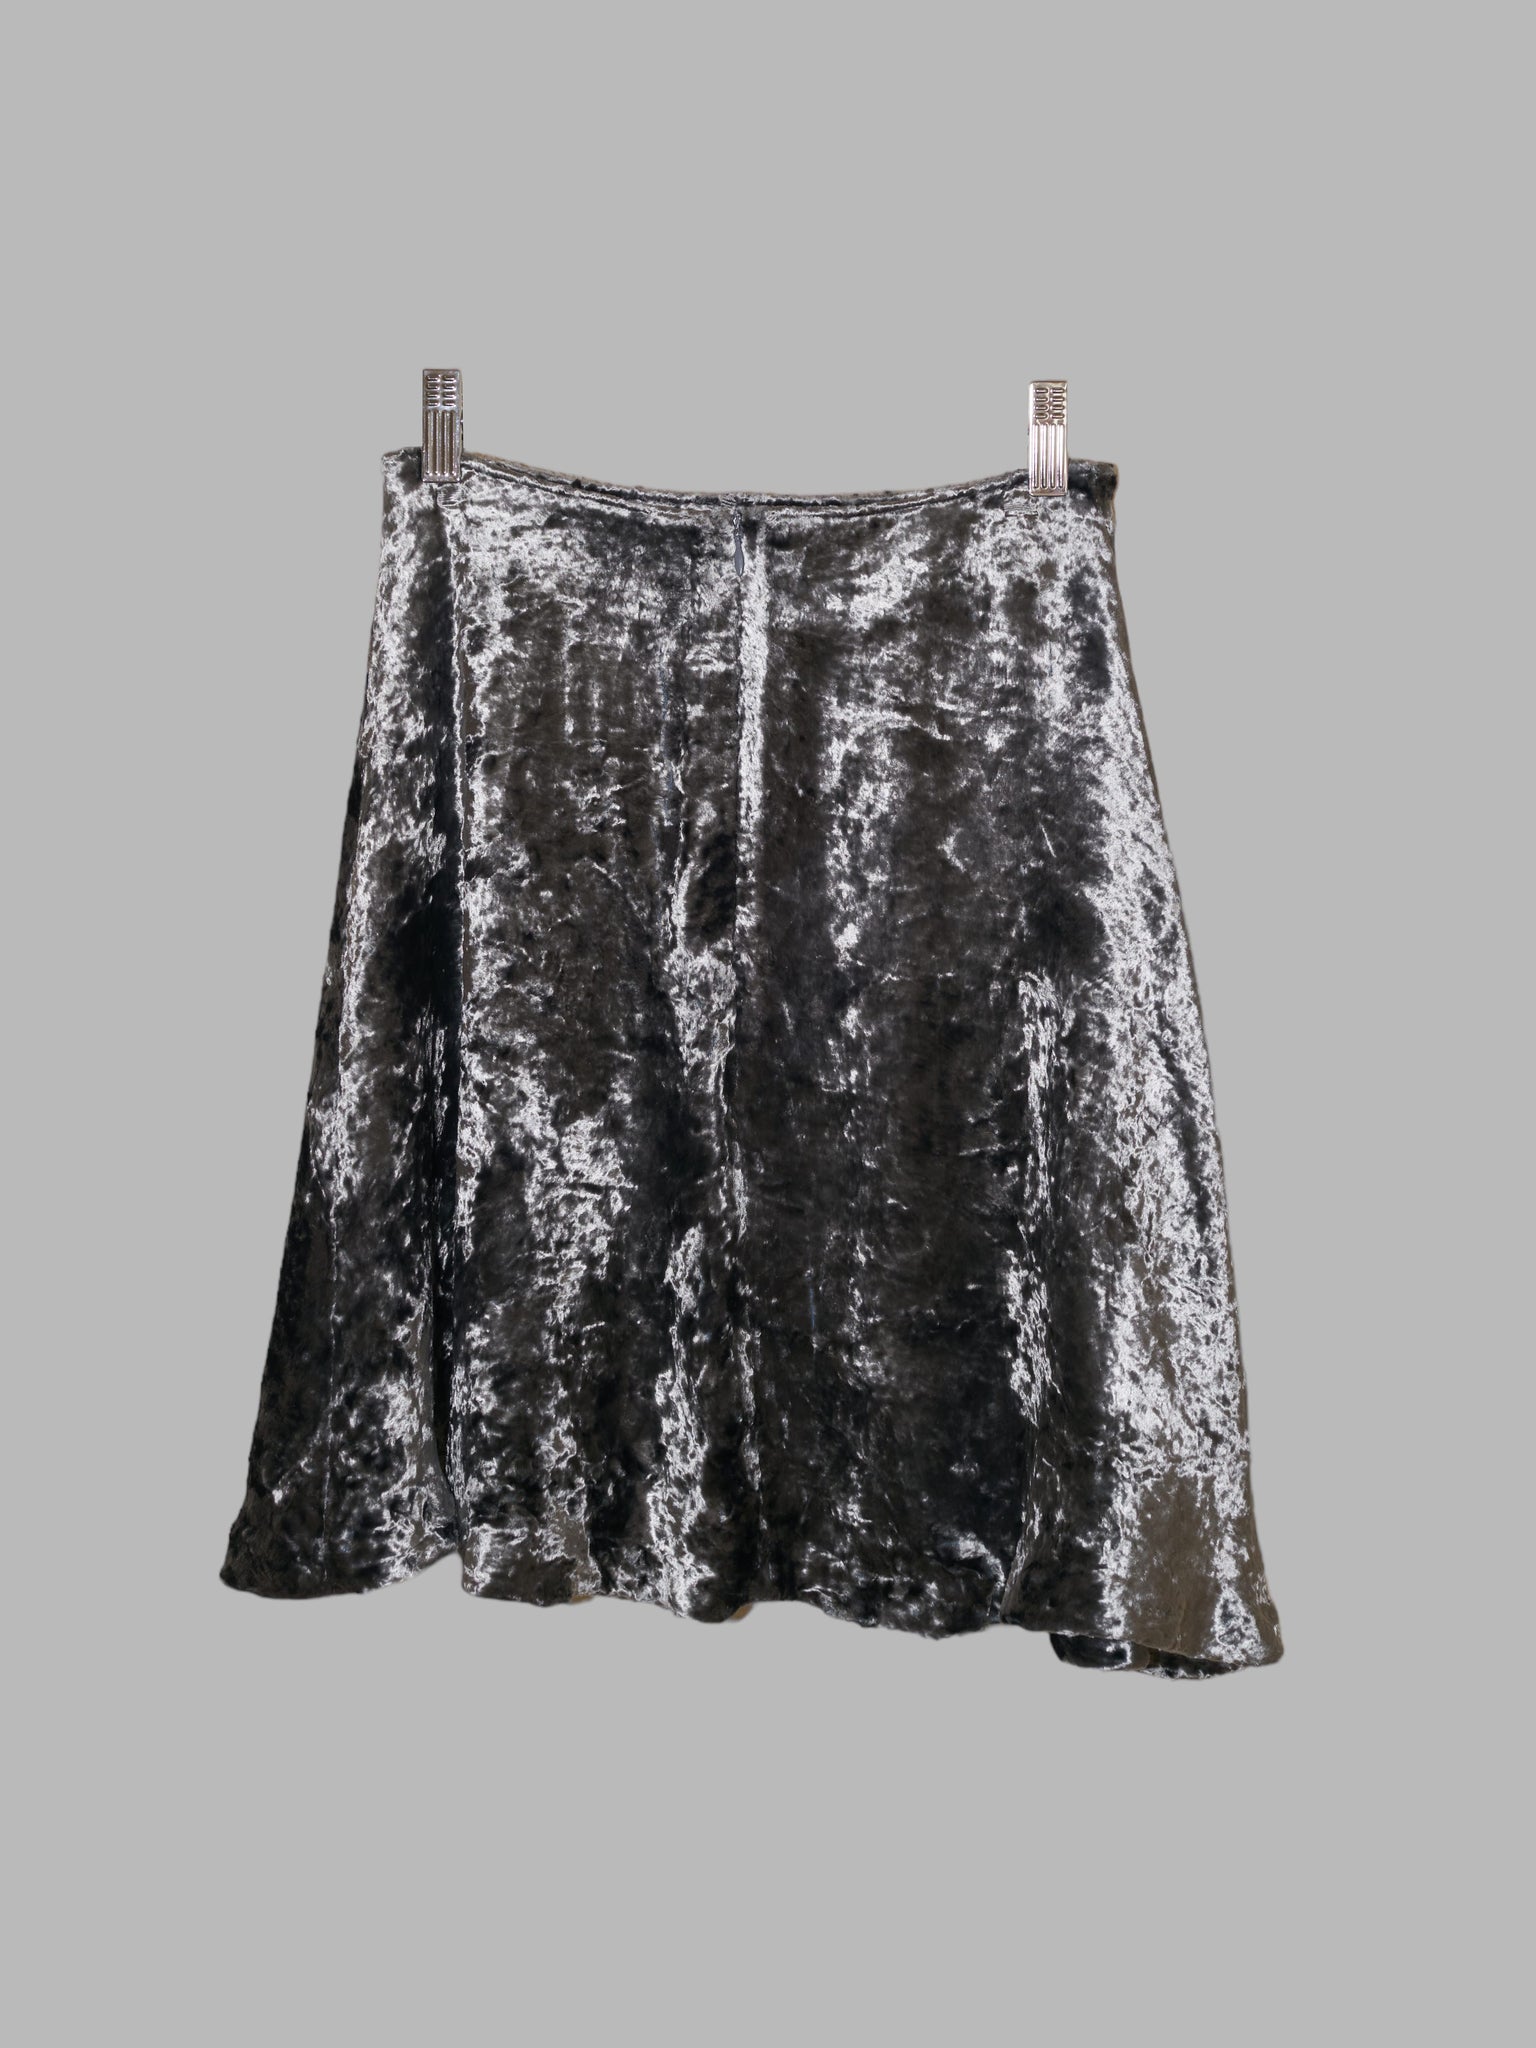 Yoshiki Hishinuma 1990s shiny silver velvet knee length skirt - size 1 S